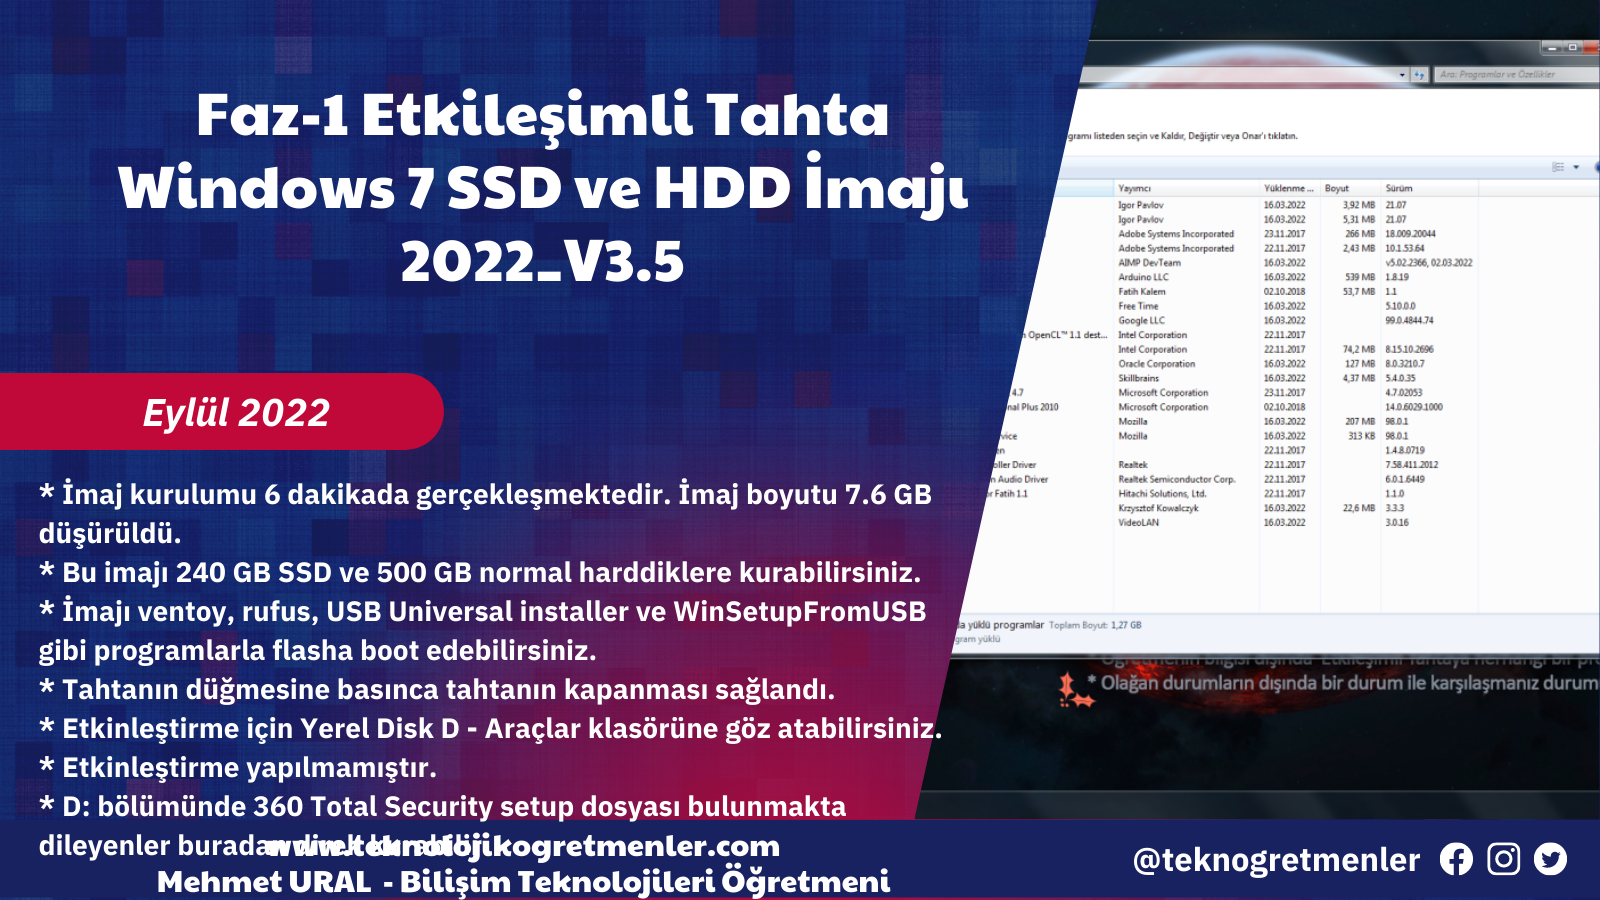 Faz-1 Etkileşimli Tahta Windows 7 SSD ve HDD İmajı 2022_V3.5 – Eylül 2022